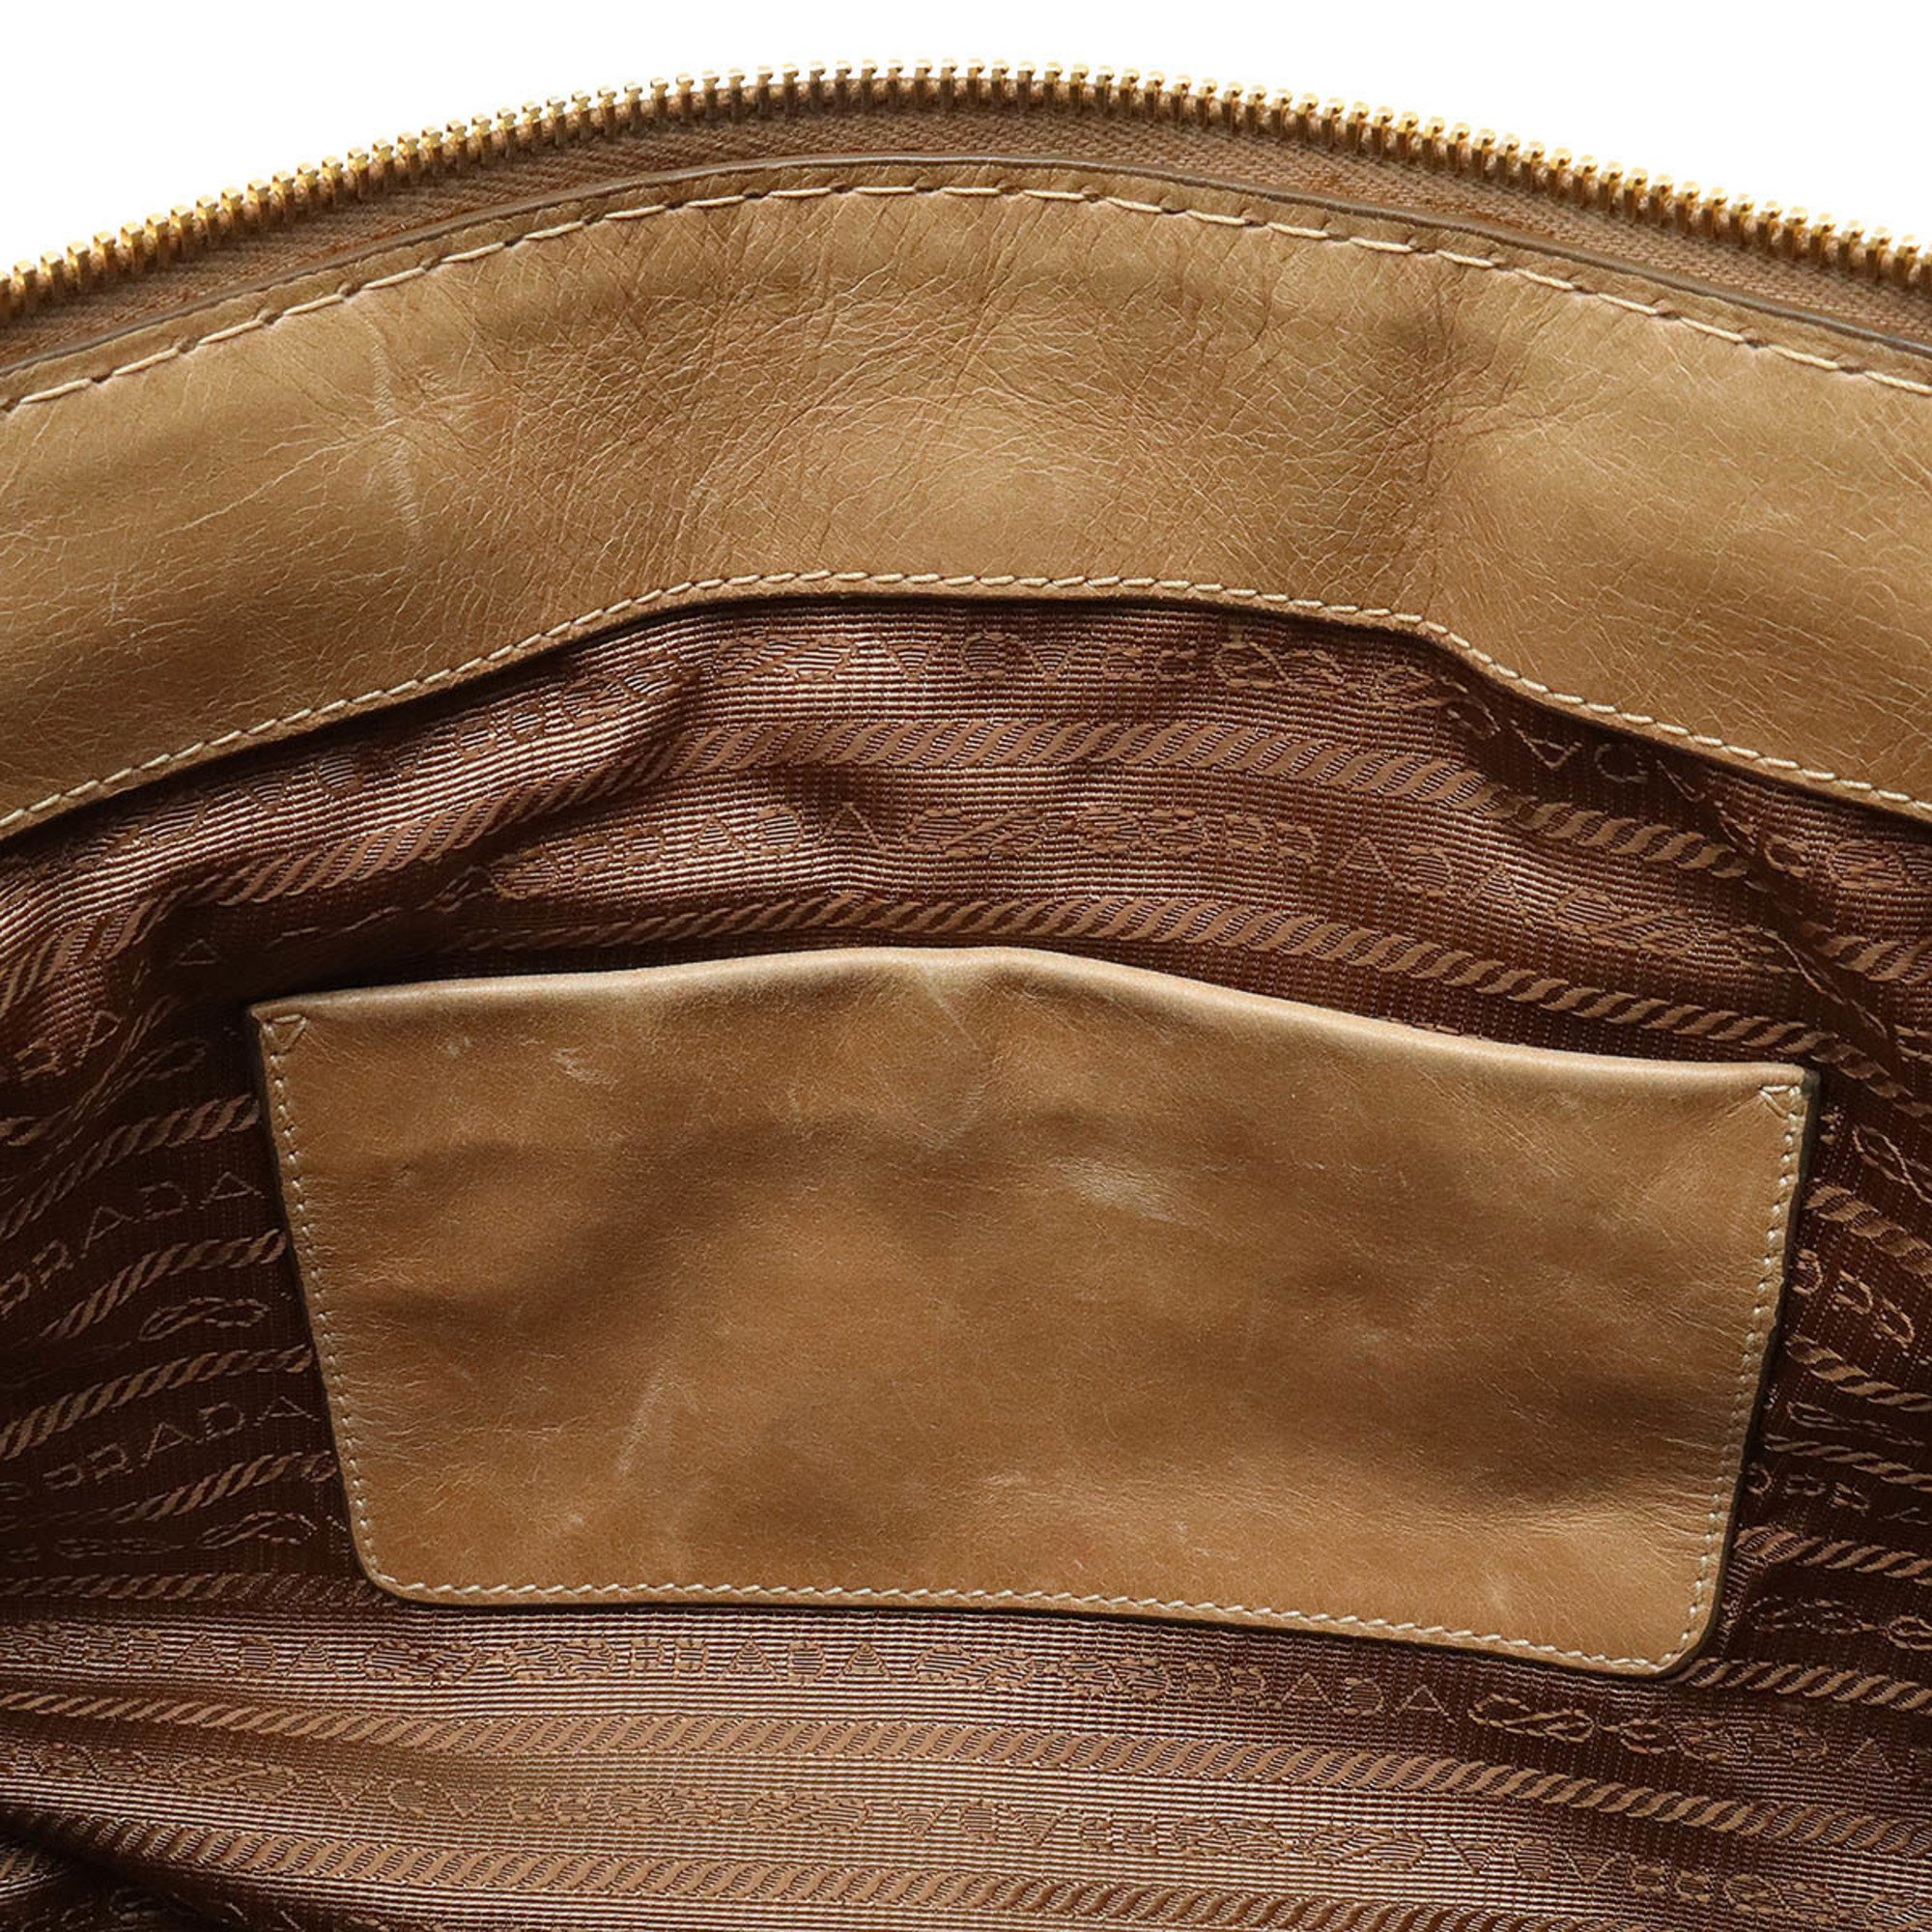 PRADA Prada handbag Boston bag shoulder leather beige